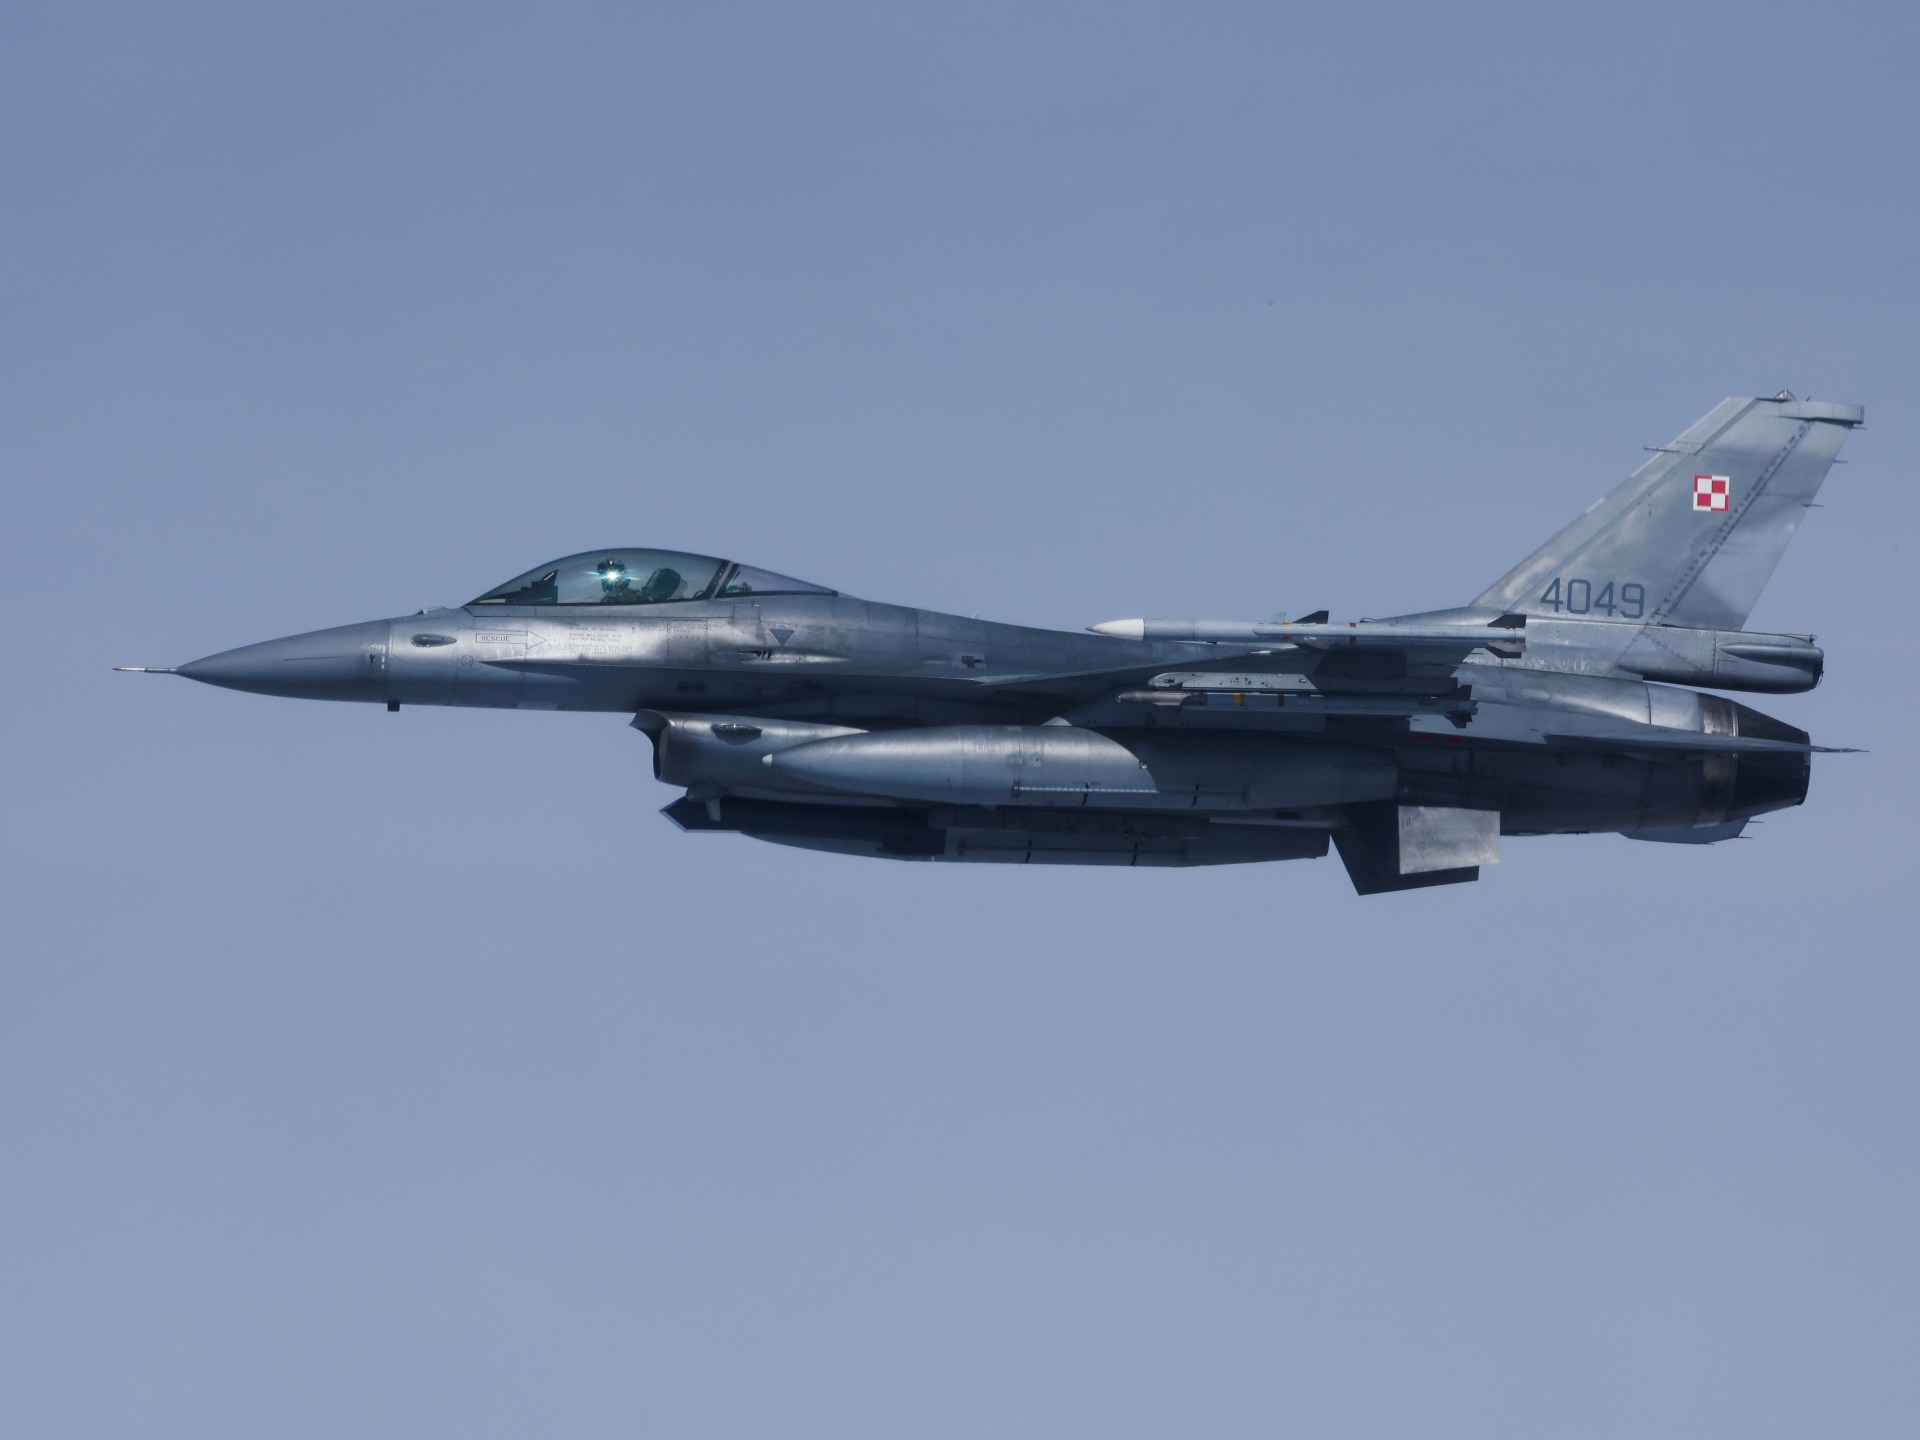 F-16s would give Ukraine an advantage, but risk escalation | News